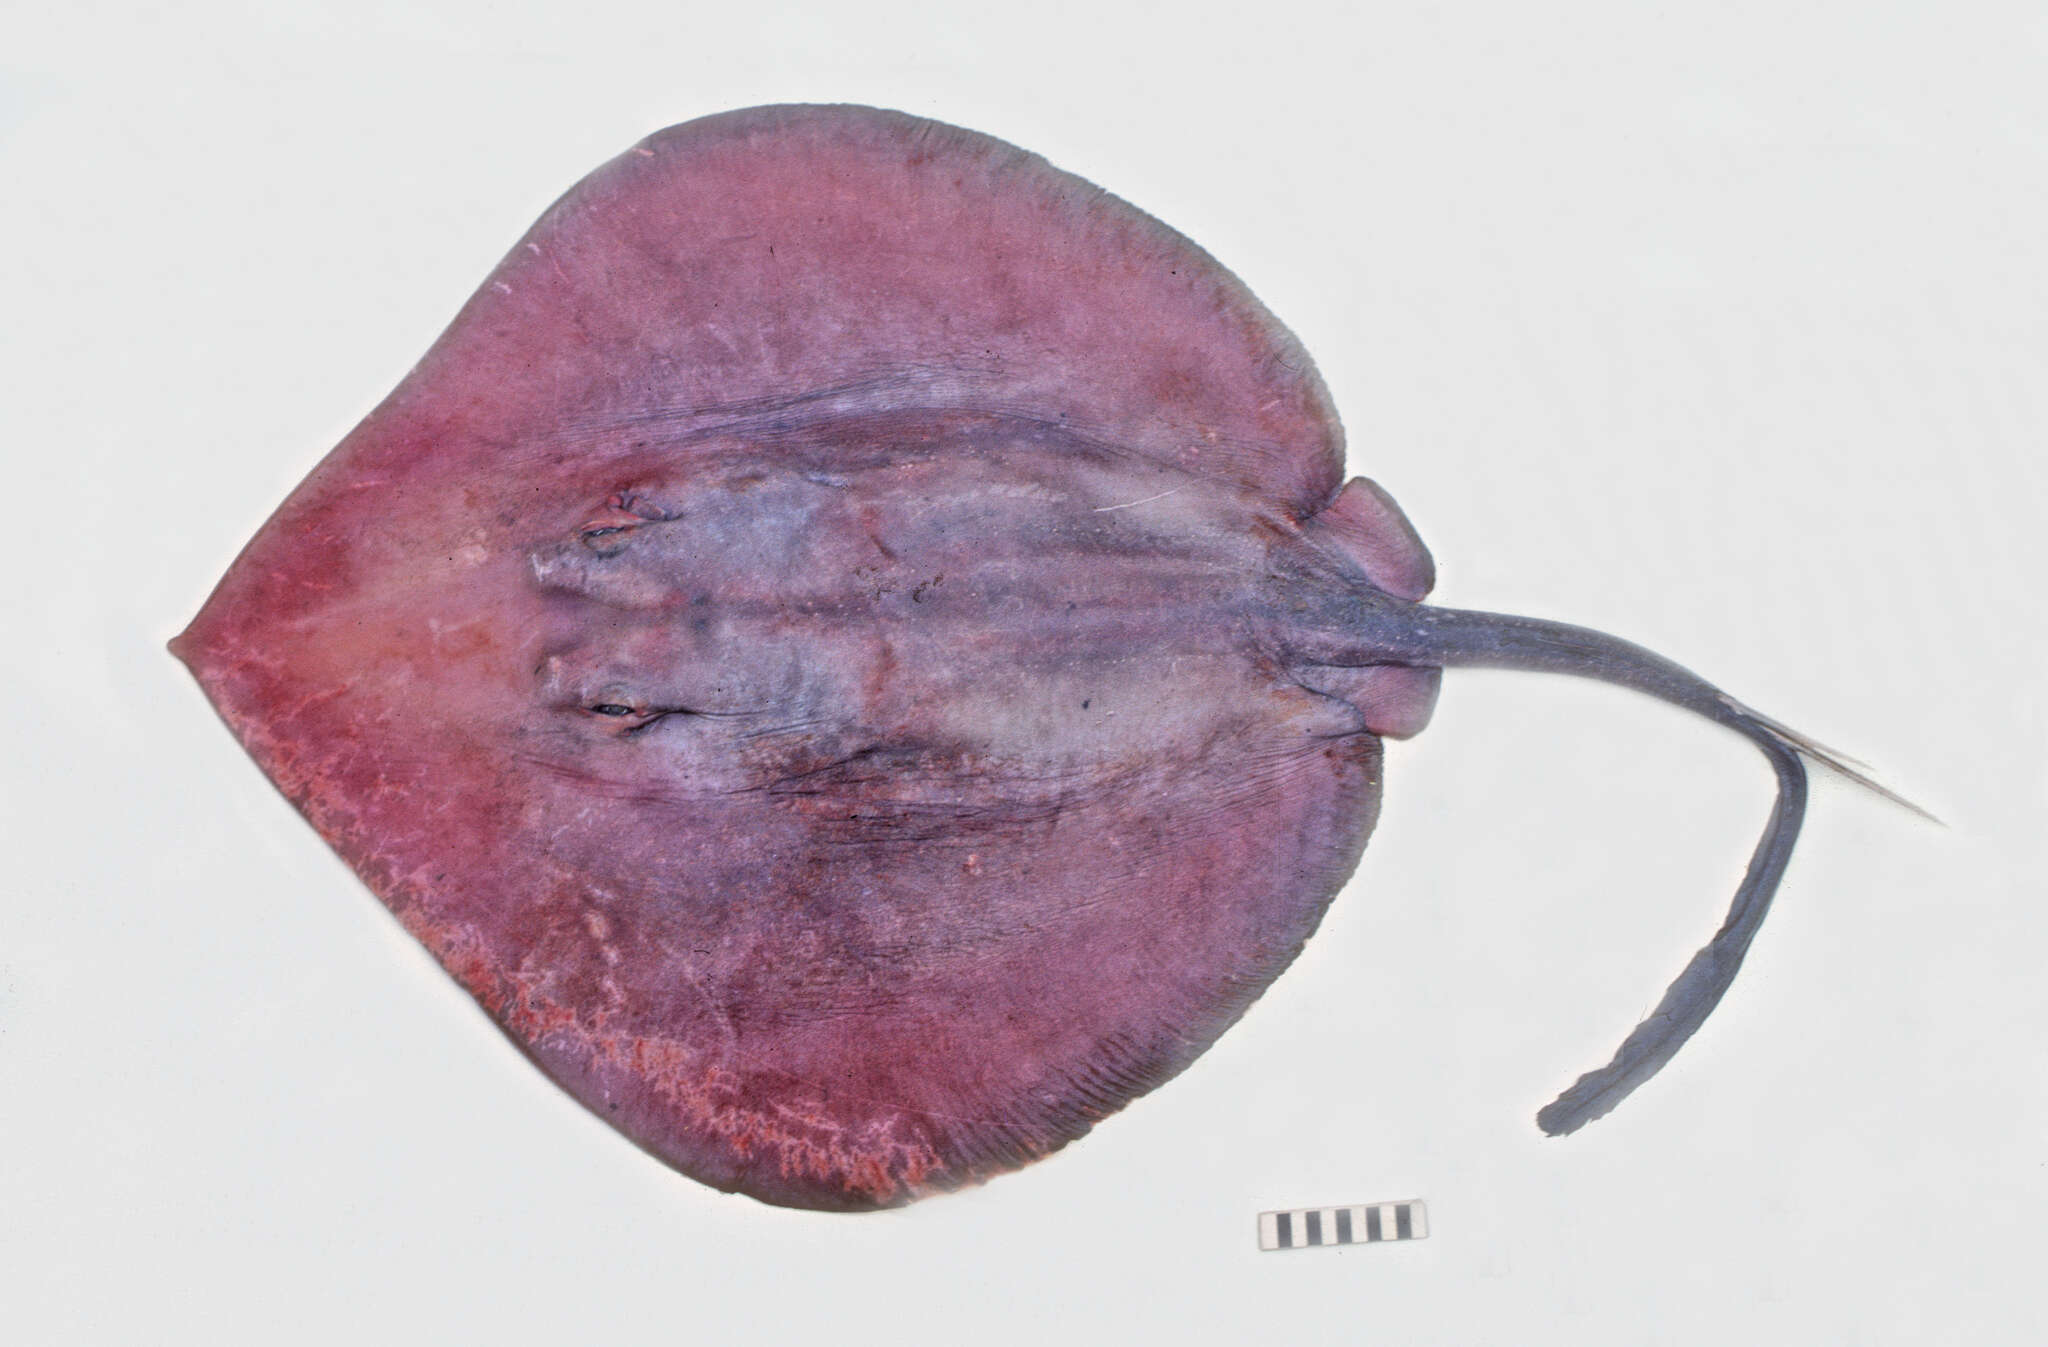 Image of Deepwater Stingray